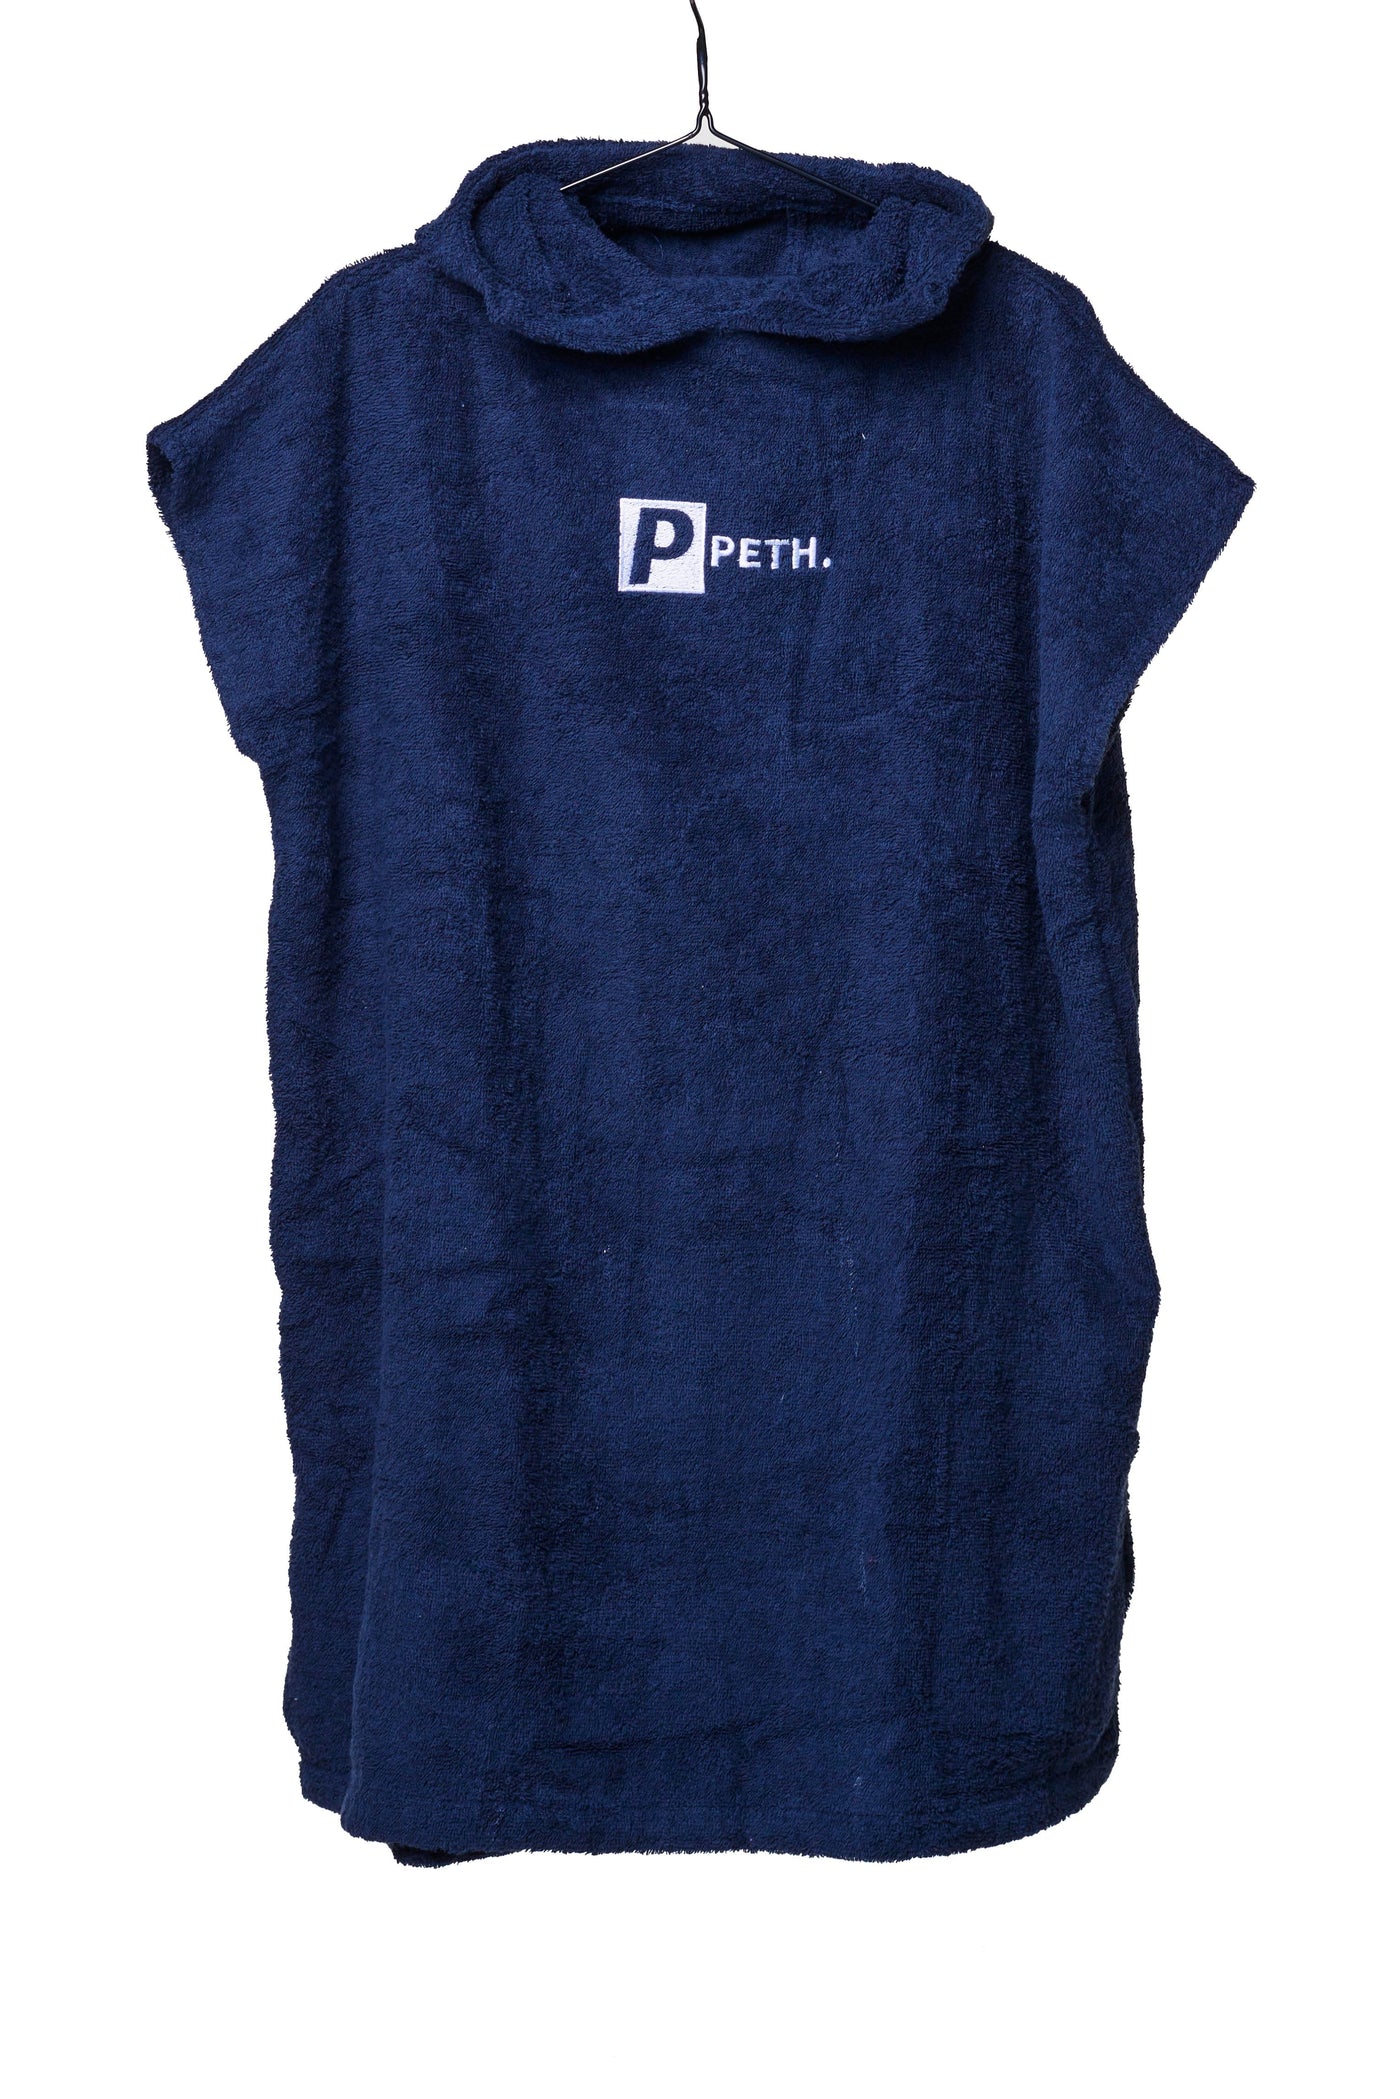 Premium Navy Blue Children’s Cotton Towel Changing Robe - Poncho